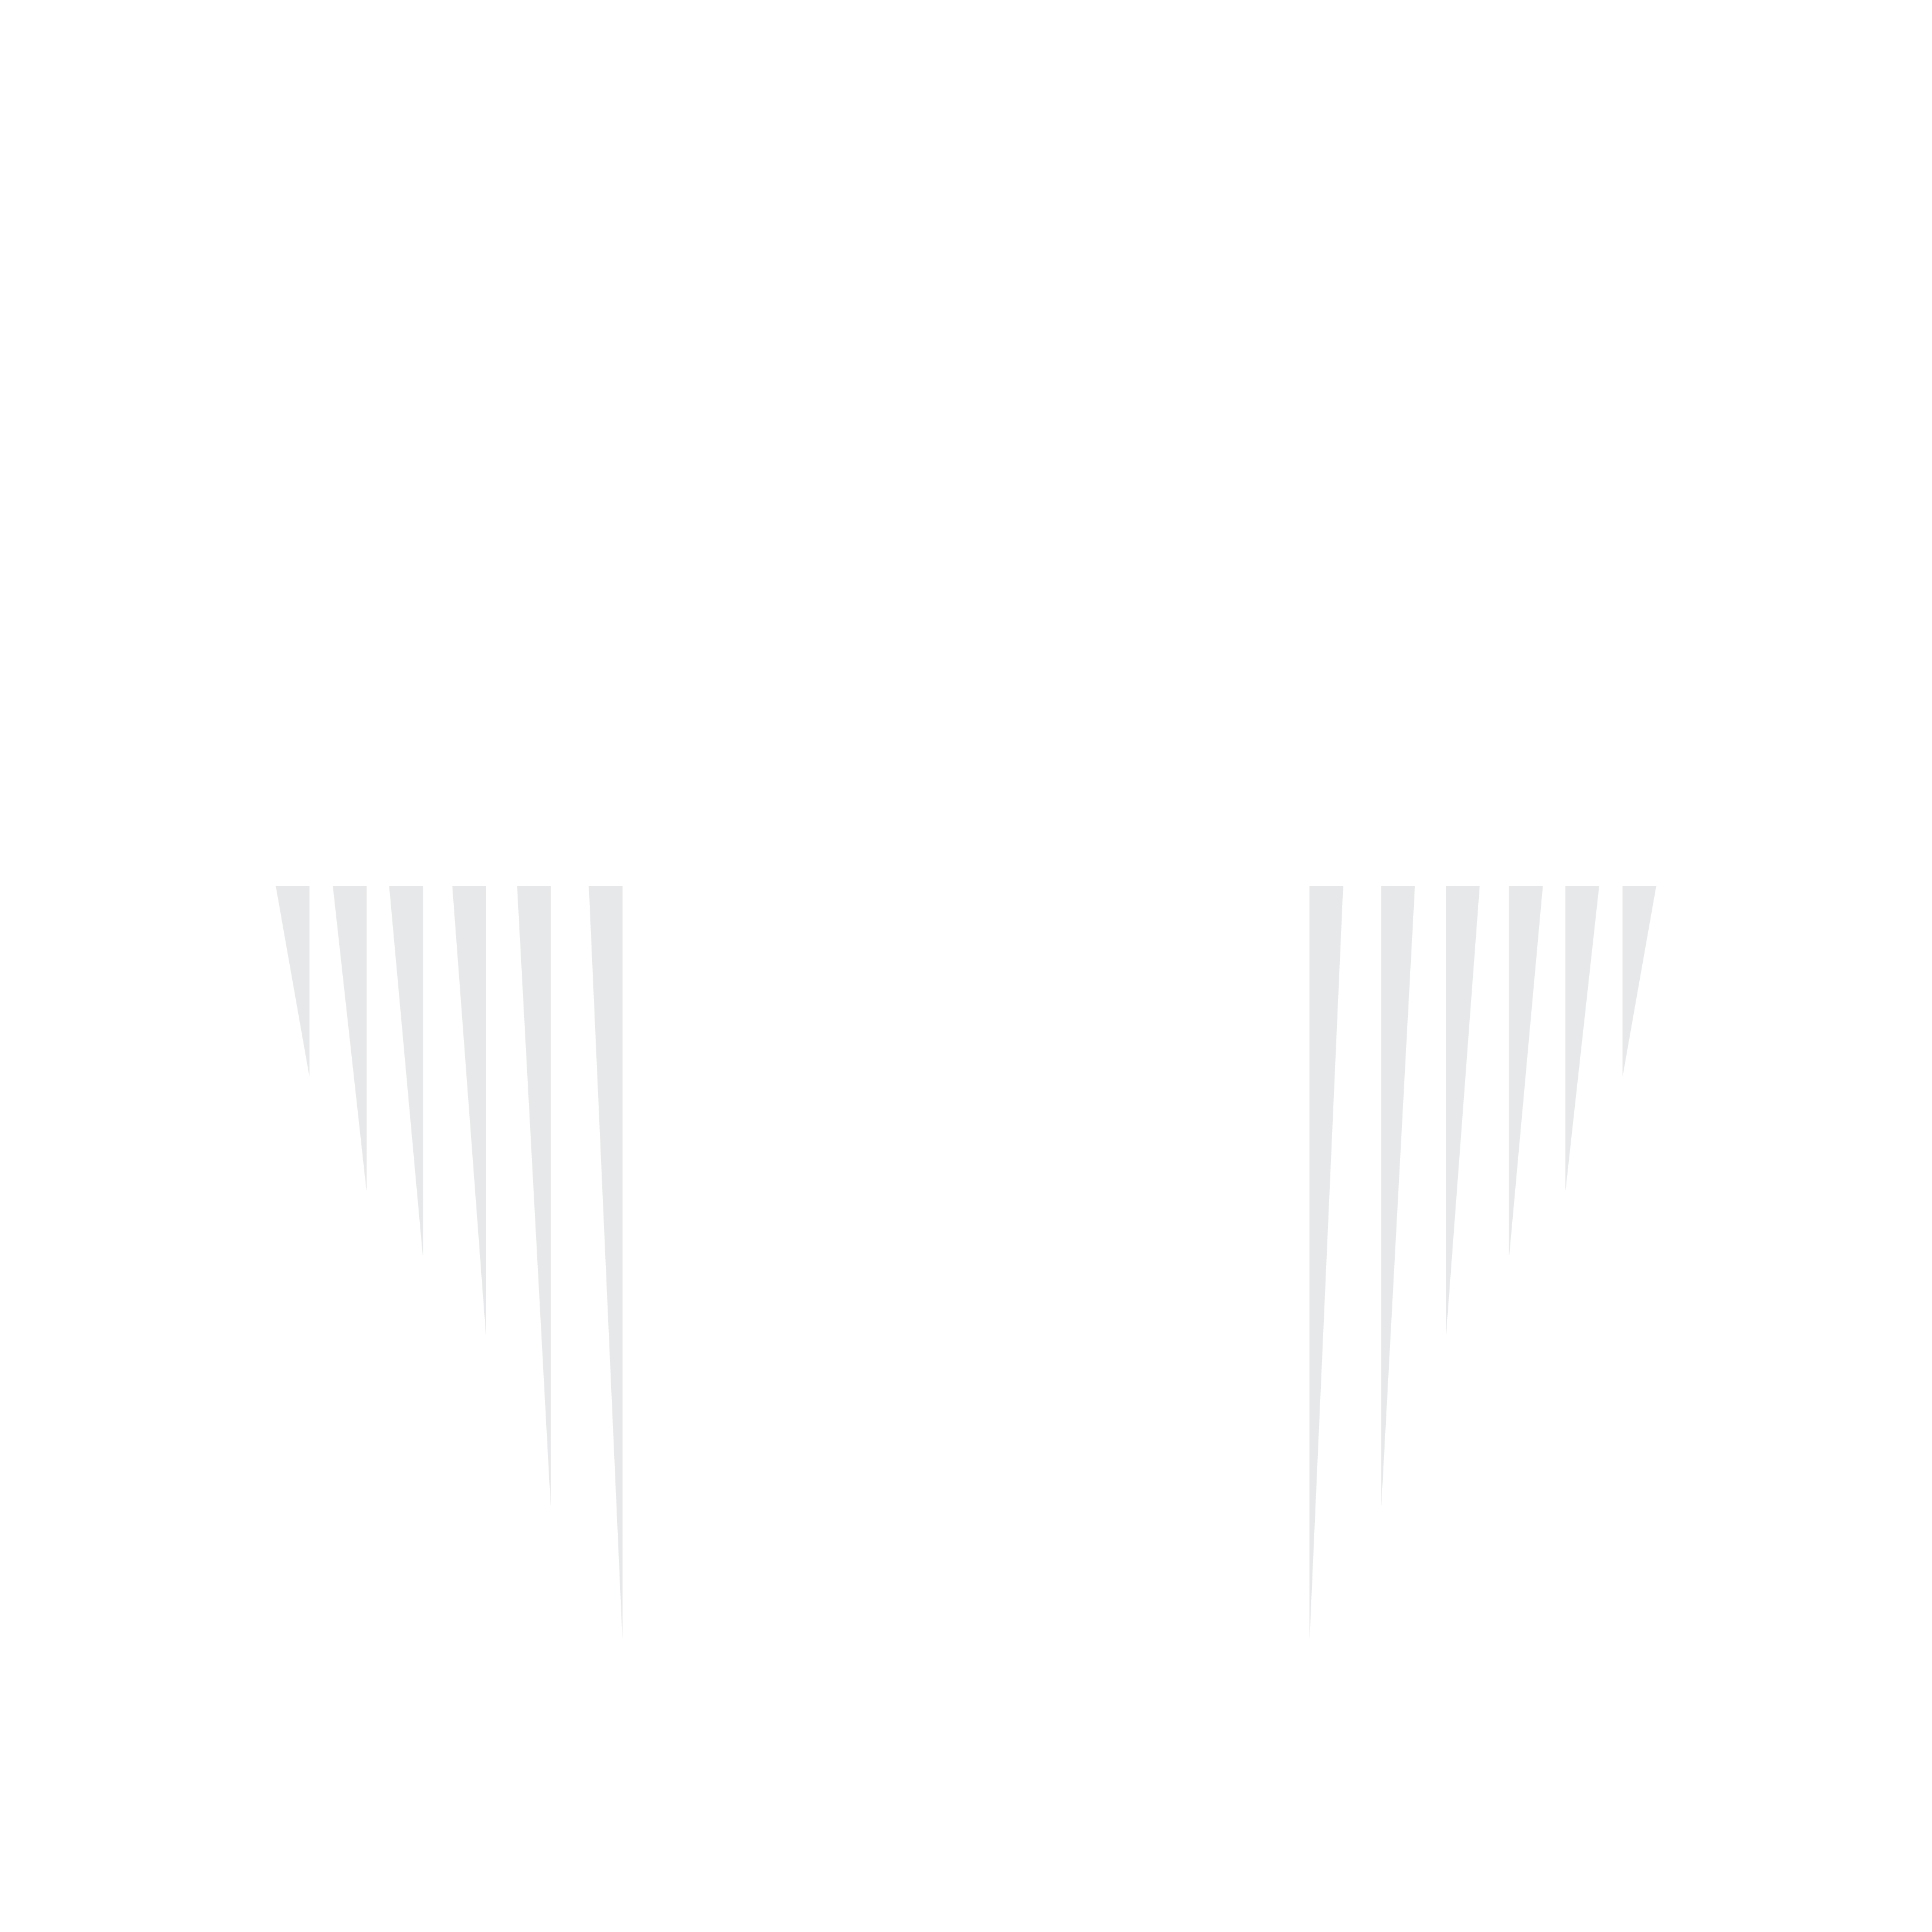 Dark Skies Studio